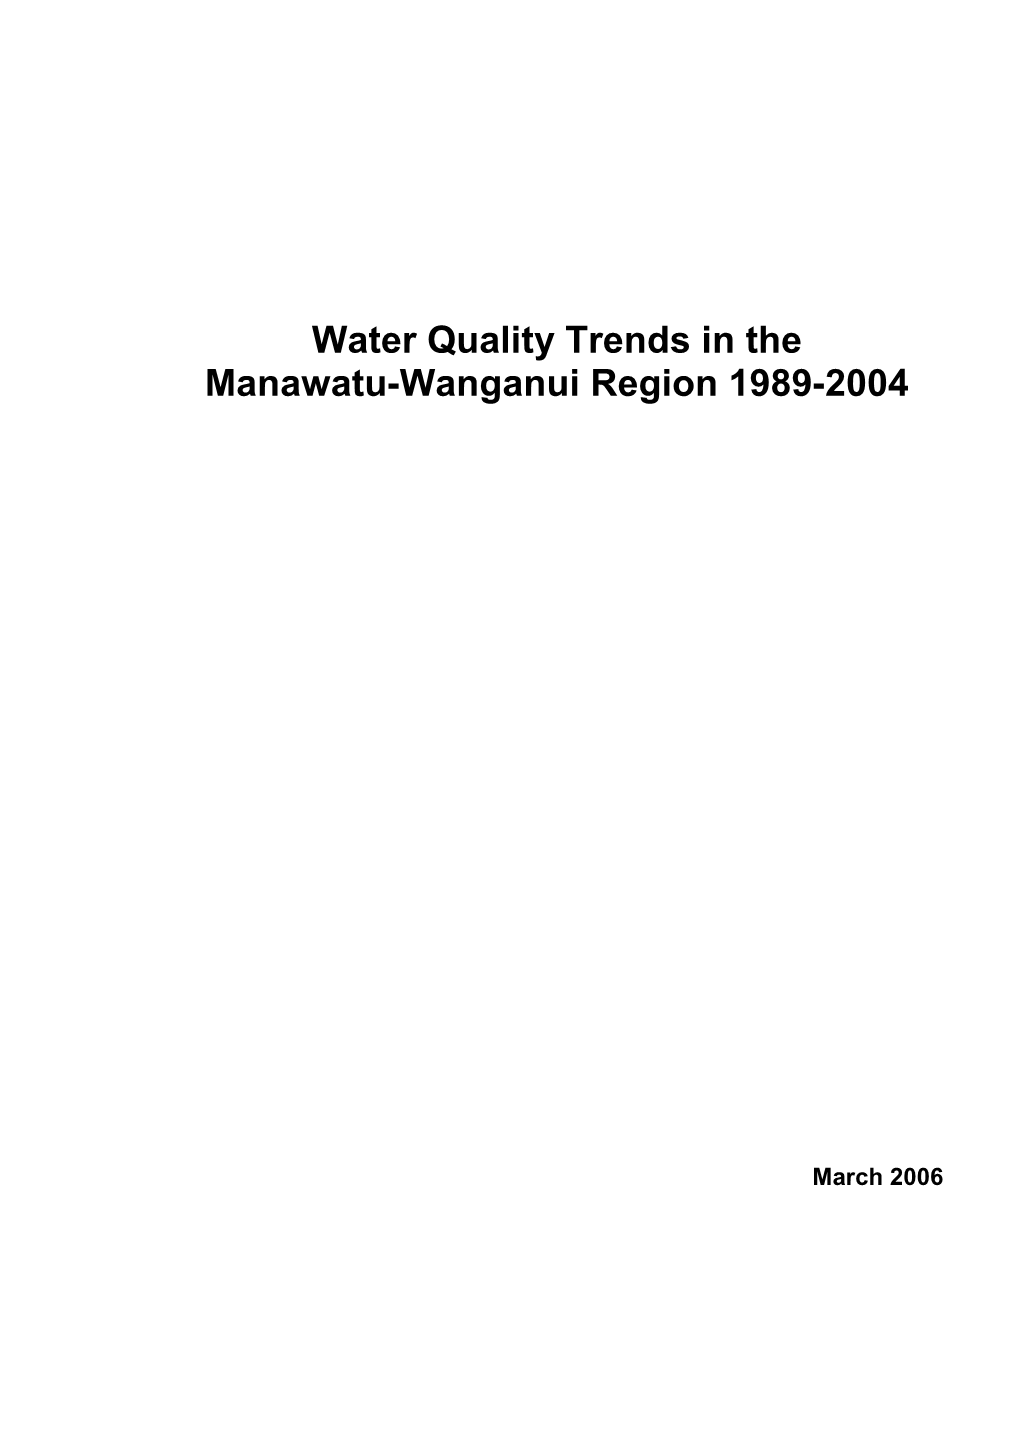 Water Quality Trends in the Manawatu-Wanganui Region 1989-2004